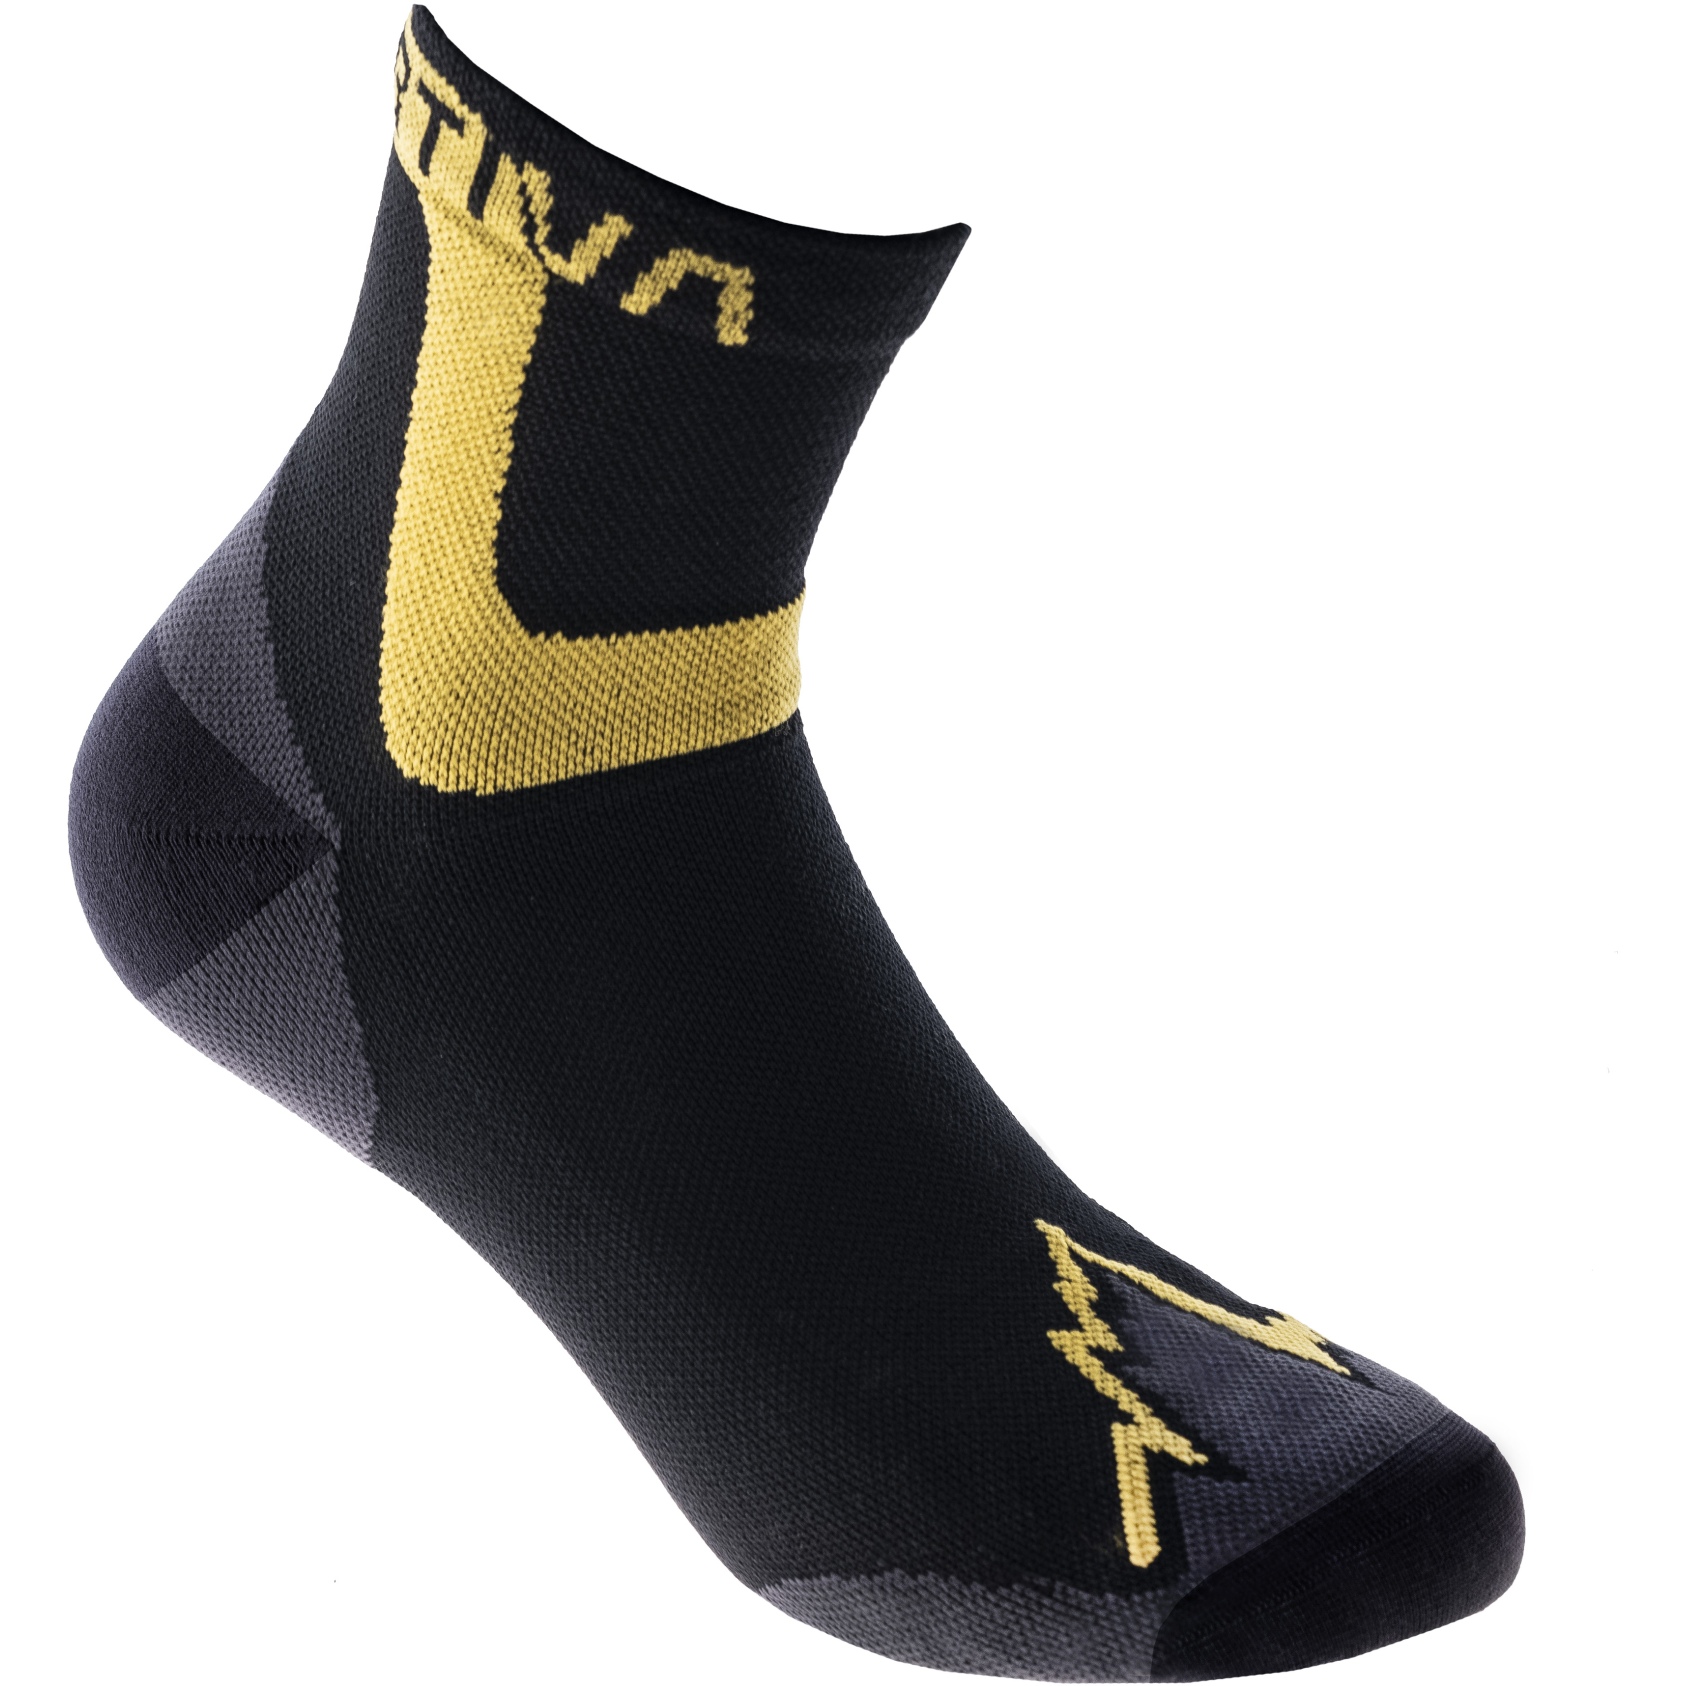 Picture of La Sportiva Ultra Running Socks - Black/Yellow 69C999100